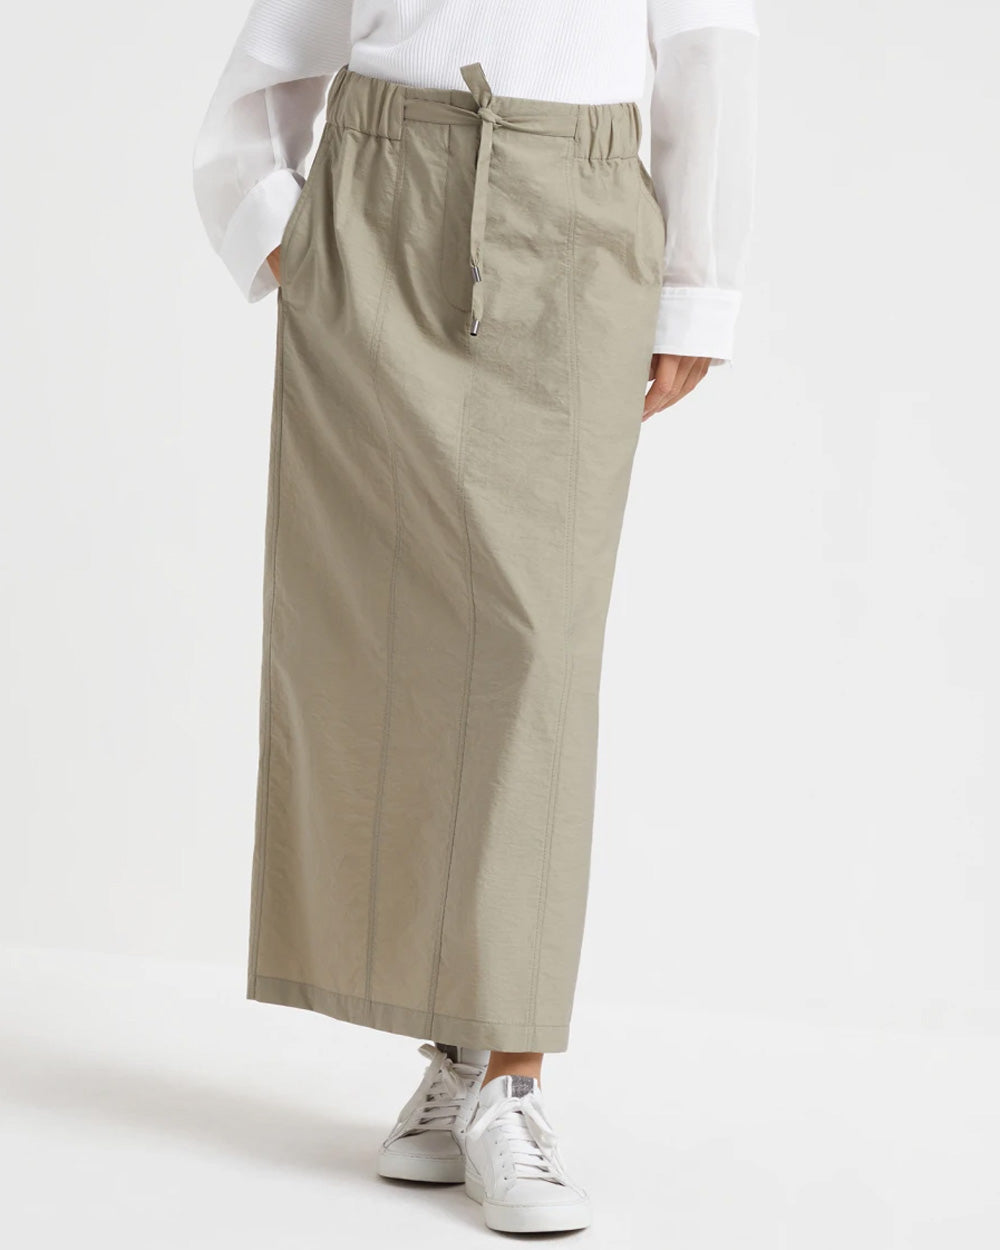 Olive Techno Poplin Drawstring Skirt